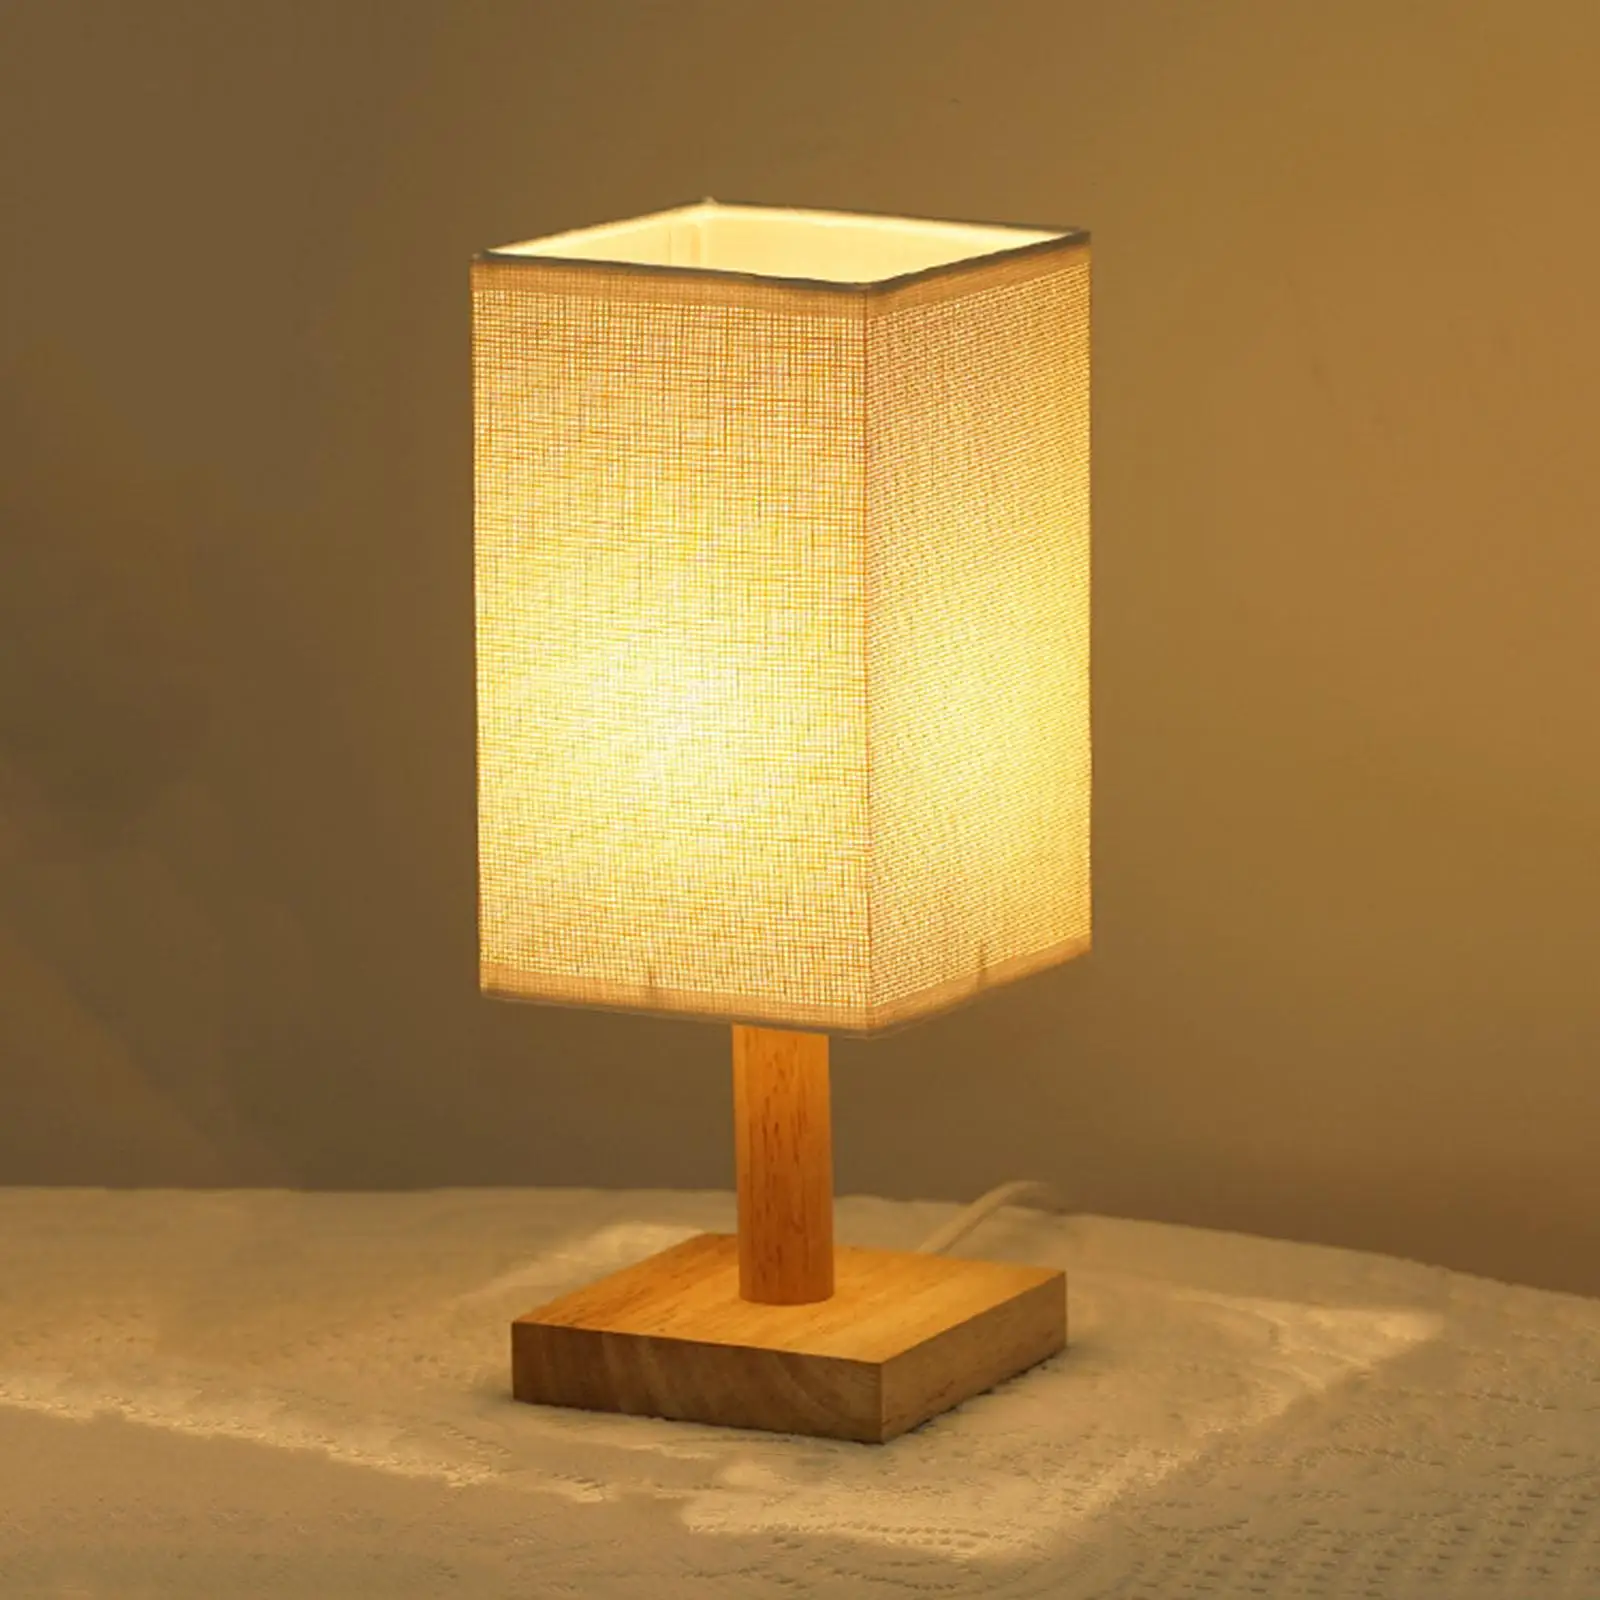 Minimalist Bedside Table Lamp Night Light USB Powered Small Nightstand Lamp